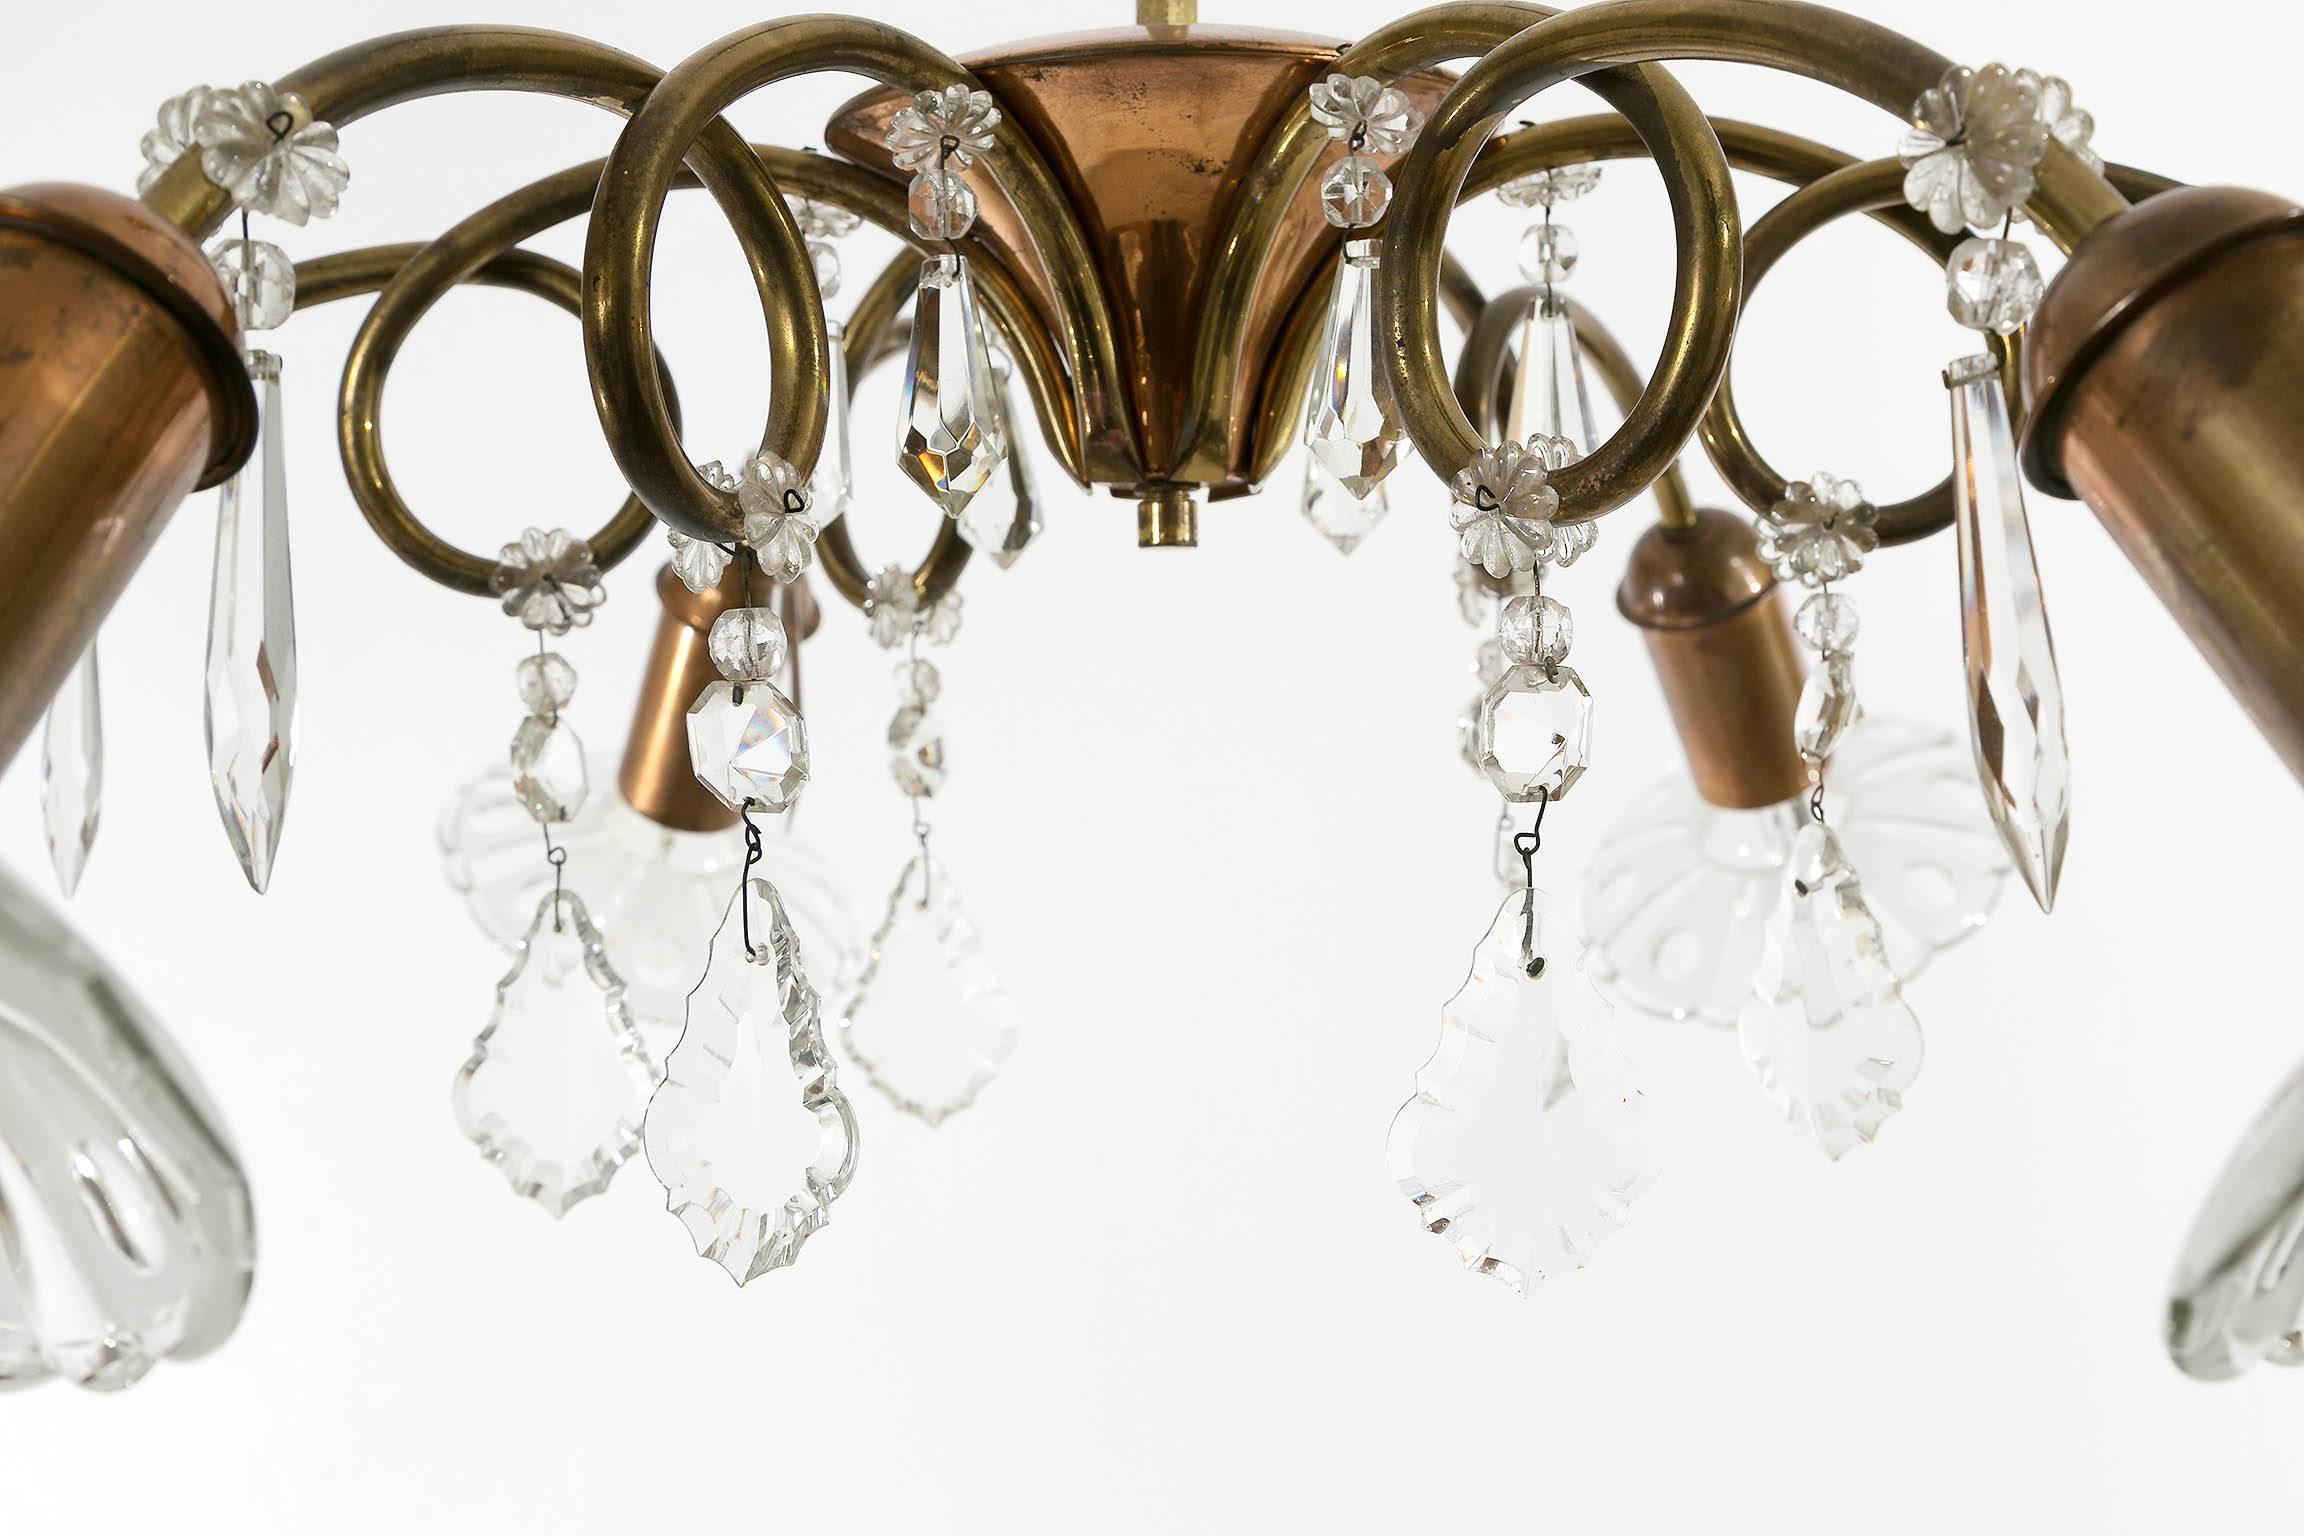 Rupert Nikoll Chandelier, Glass Copper Brass, Austria, 1950s For Sale 1